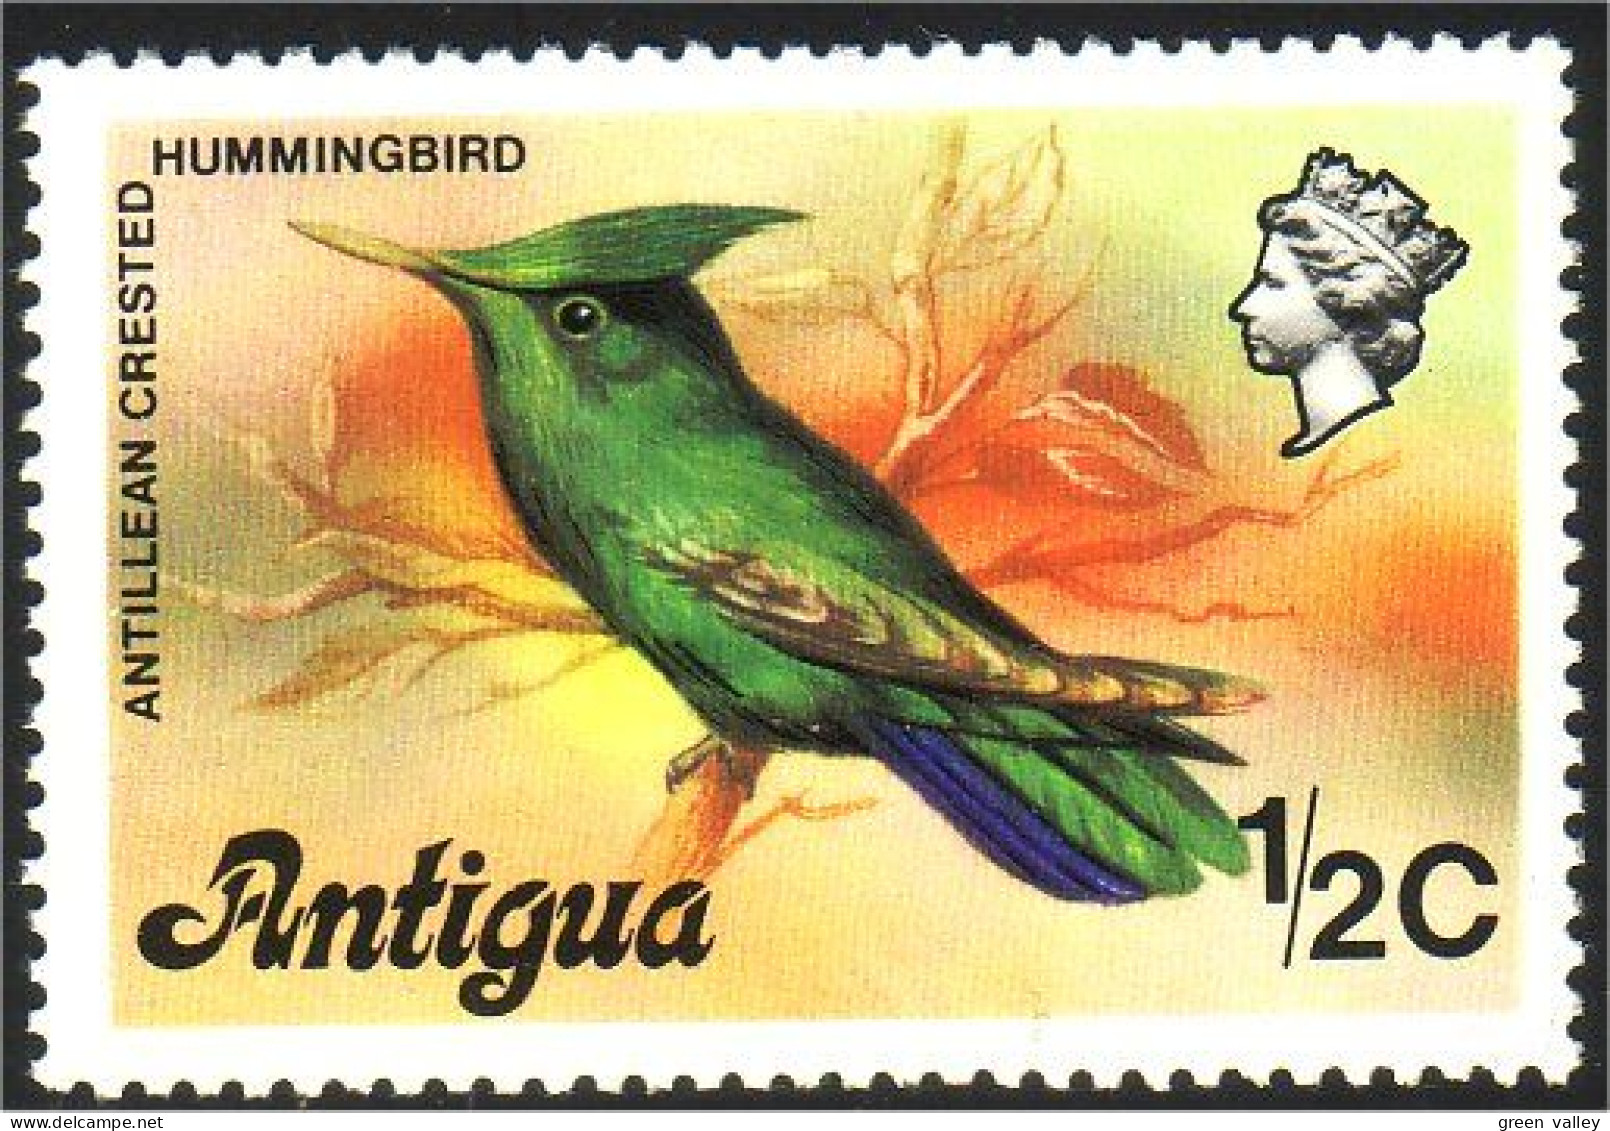 142 Antigua Colibri Hummingbird MNH ** Neuf SC (ANT-23a) - 1960-1981 Autonomie Interne